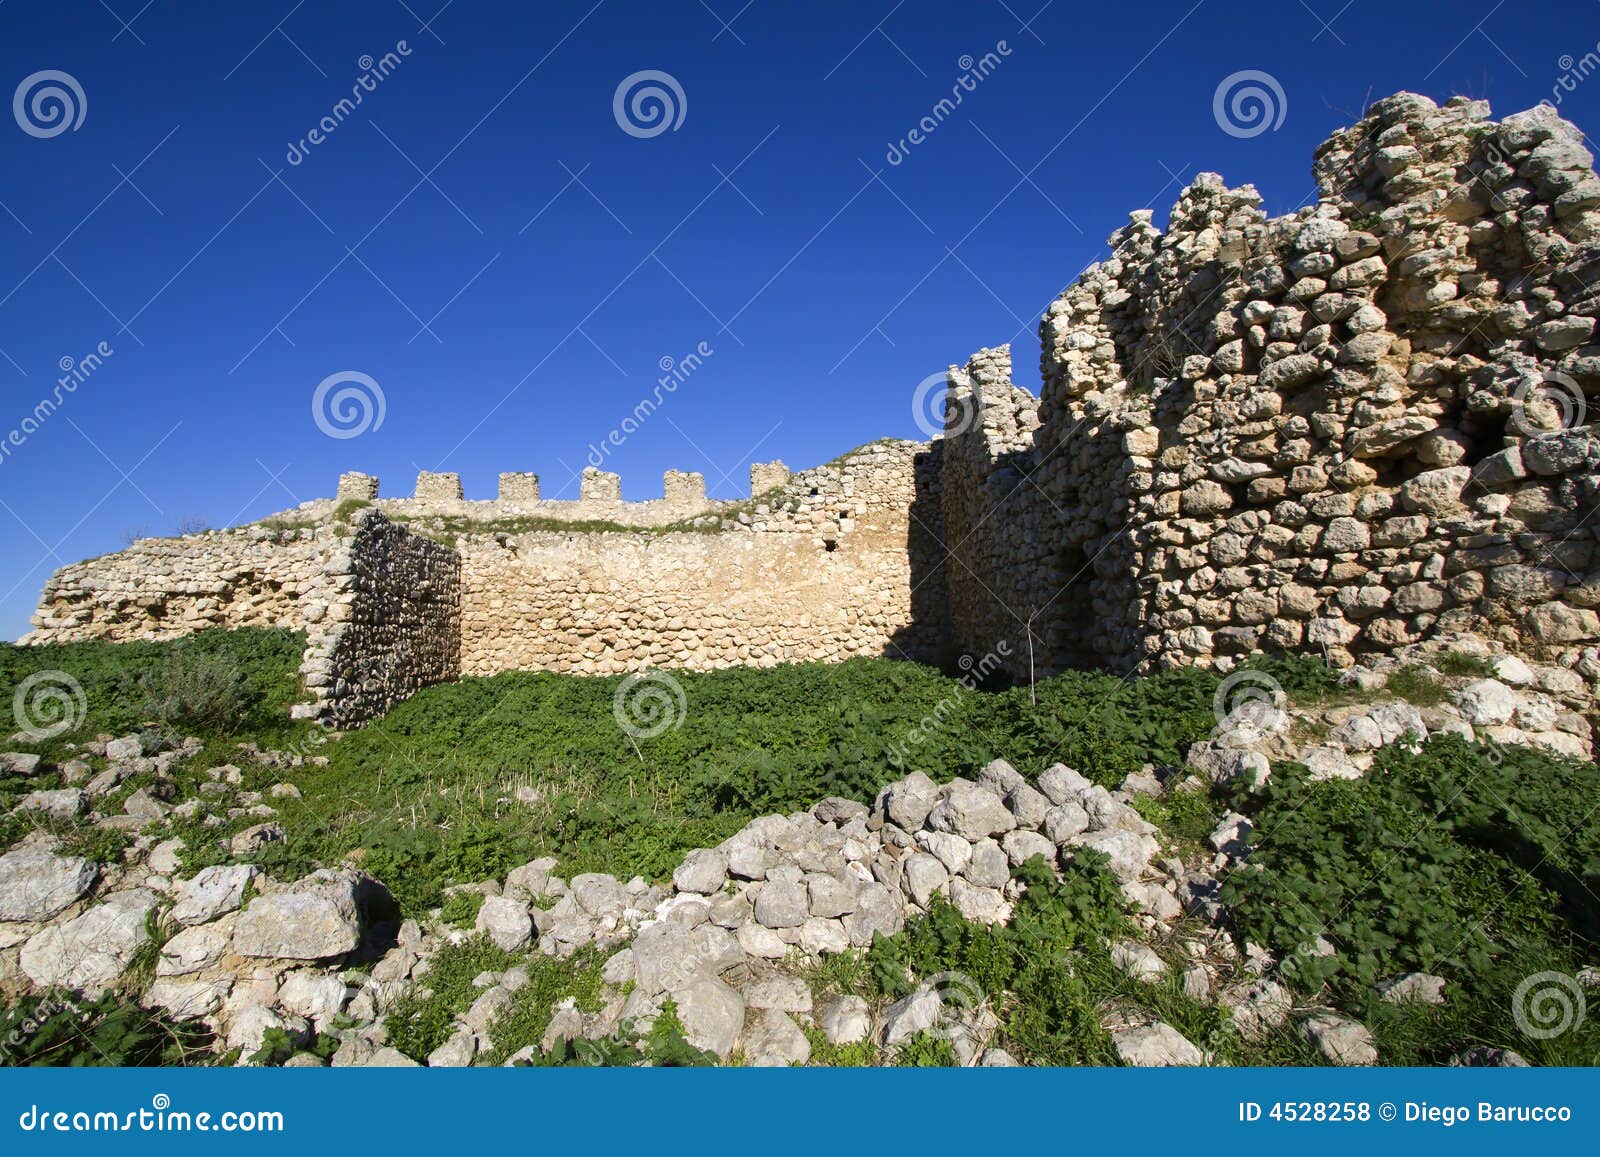 mongialino's castle